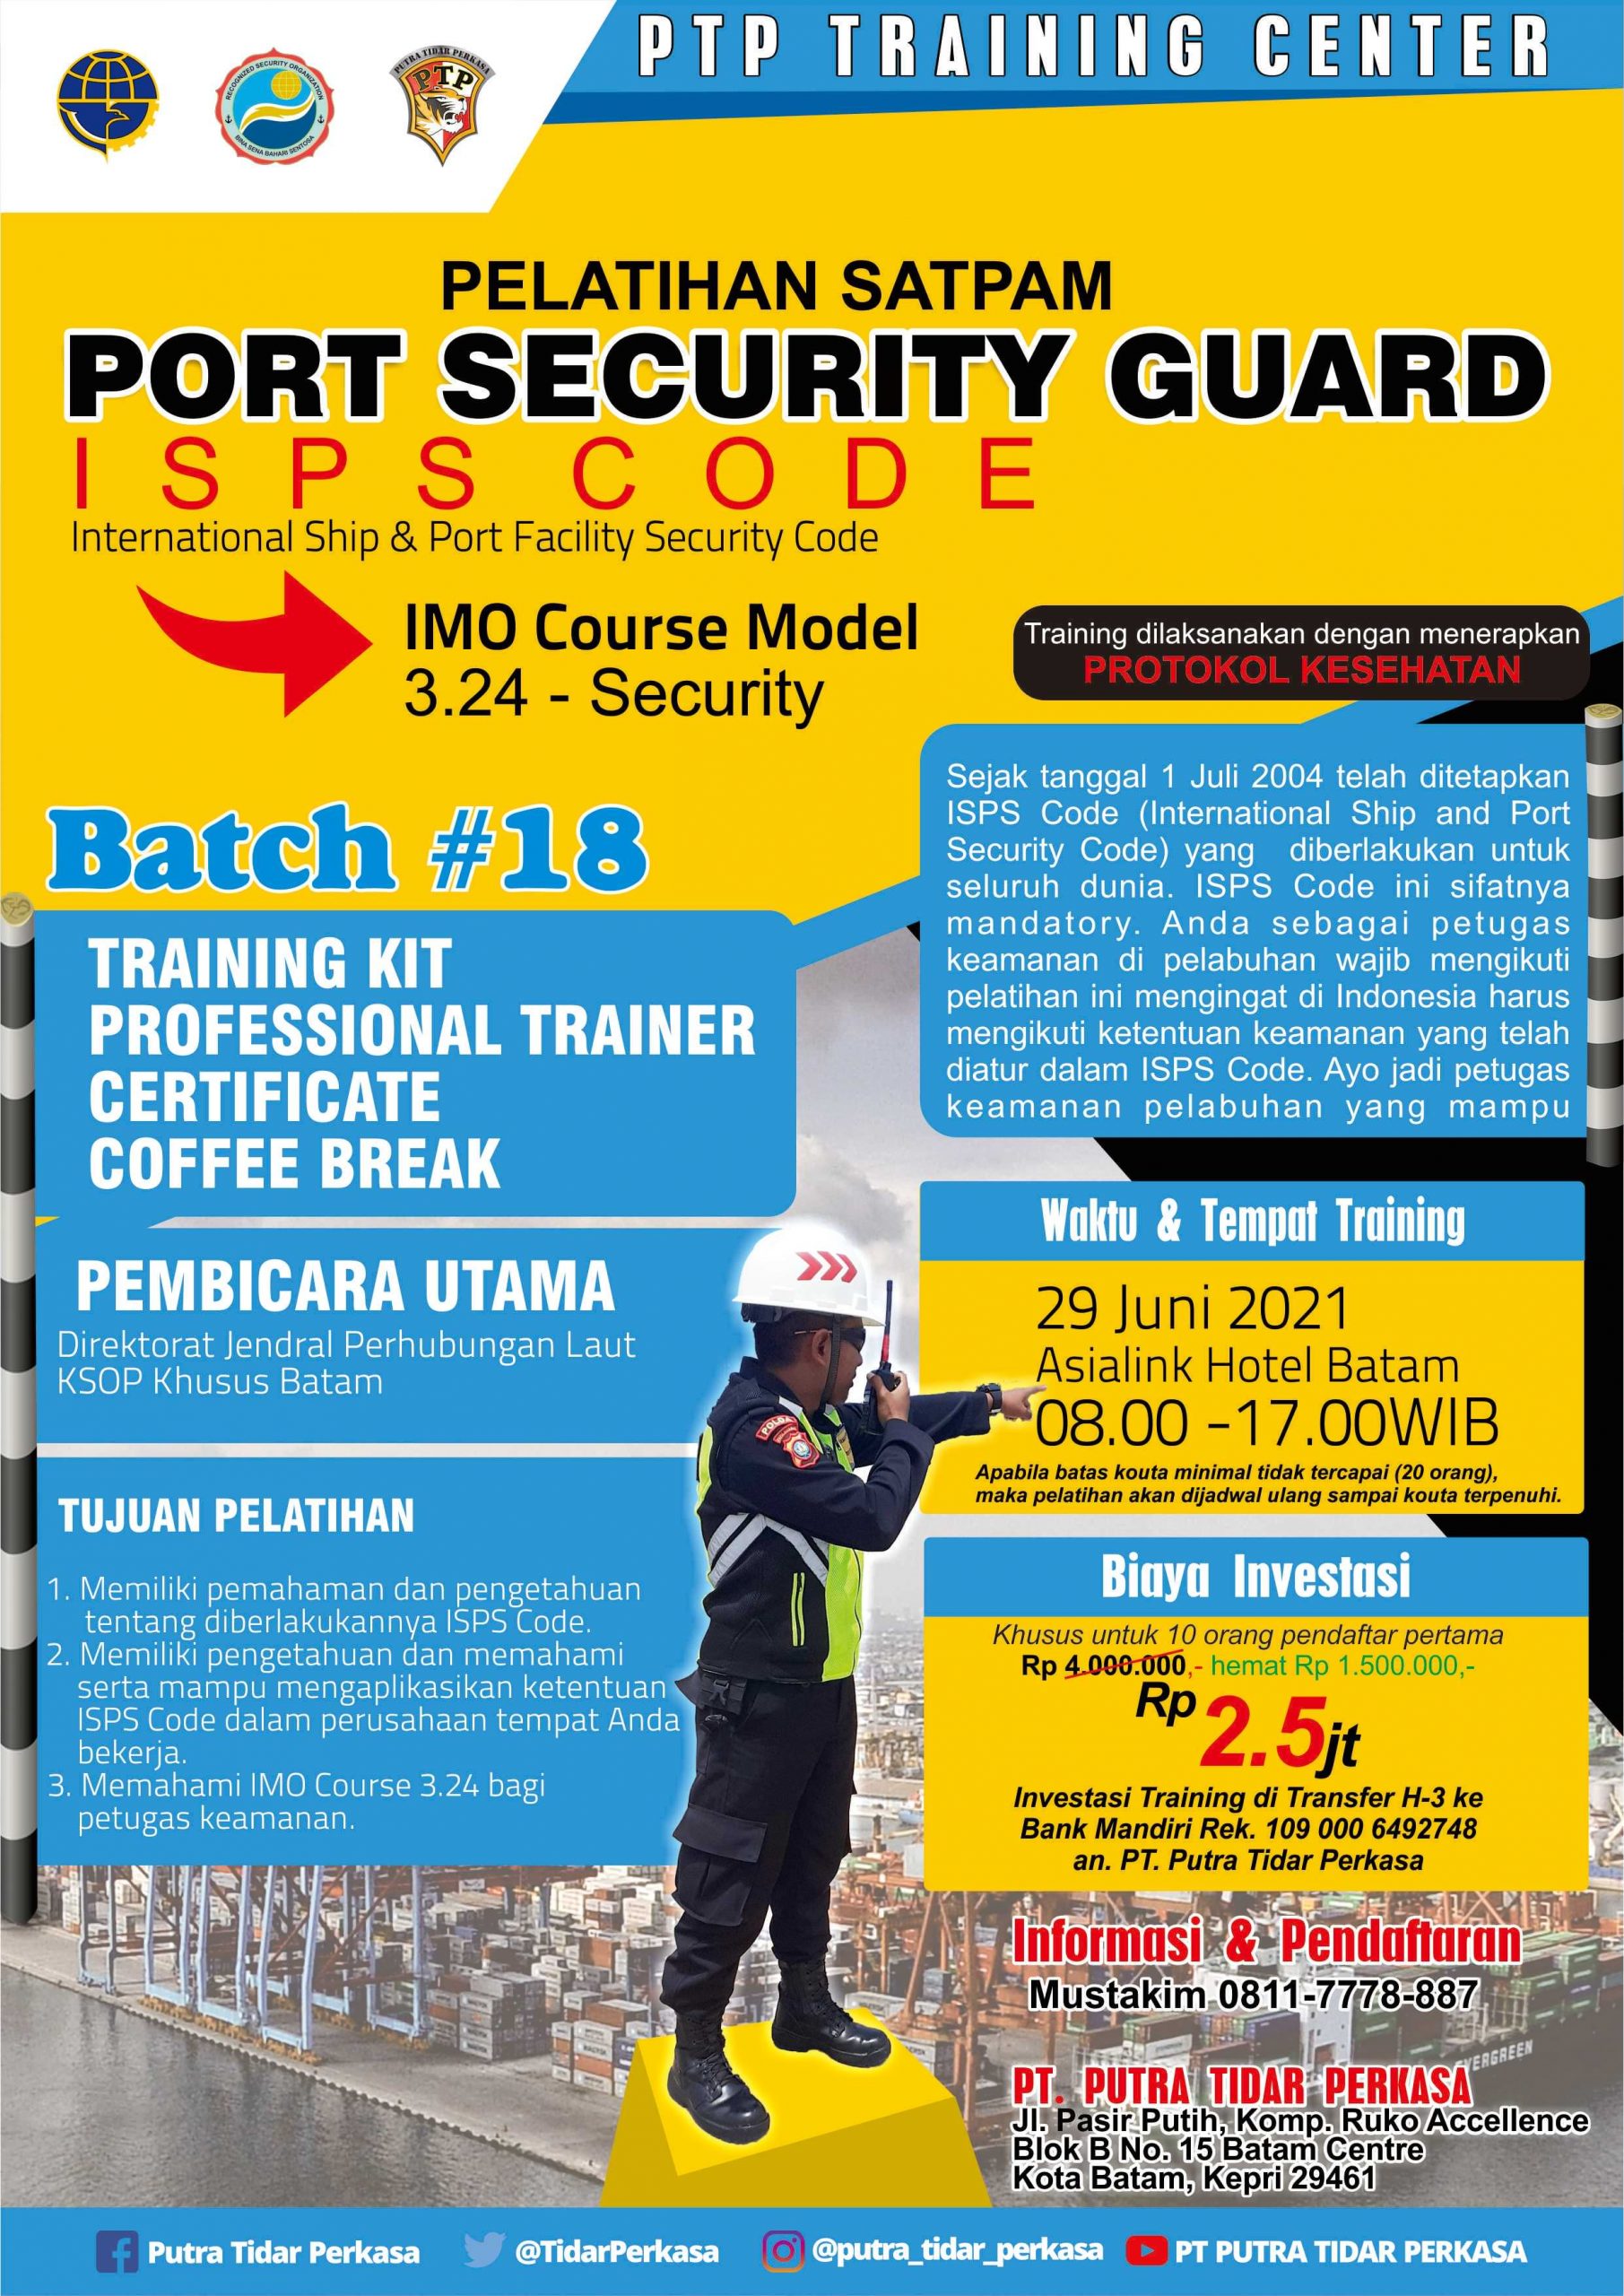 ISPS Code Training - Port Security Guard - 29 Juni 2021 - Batch #18